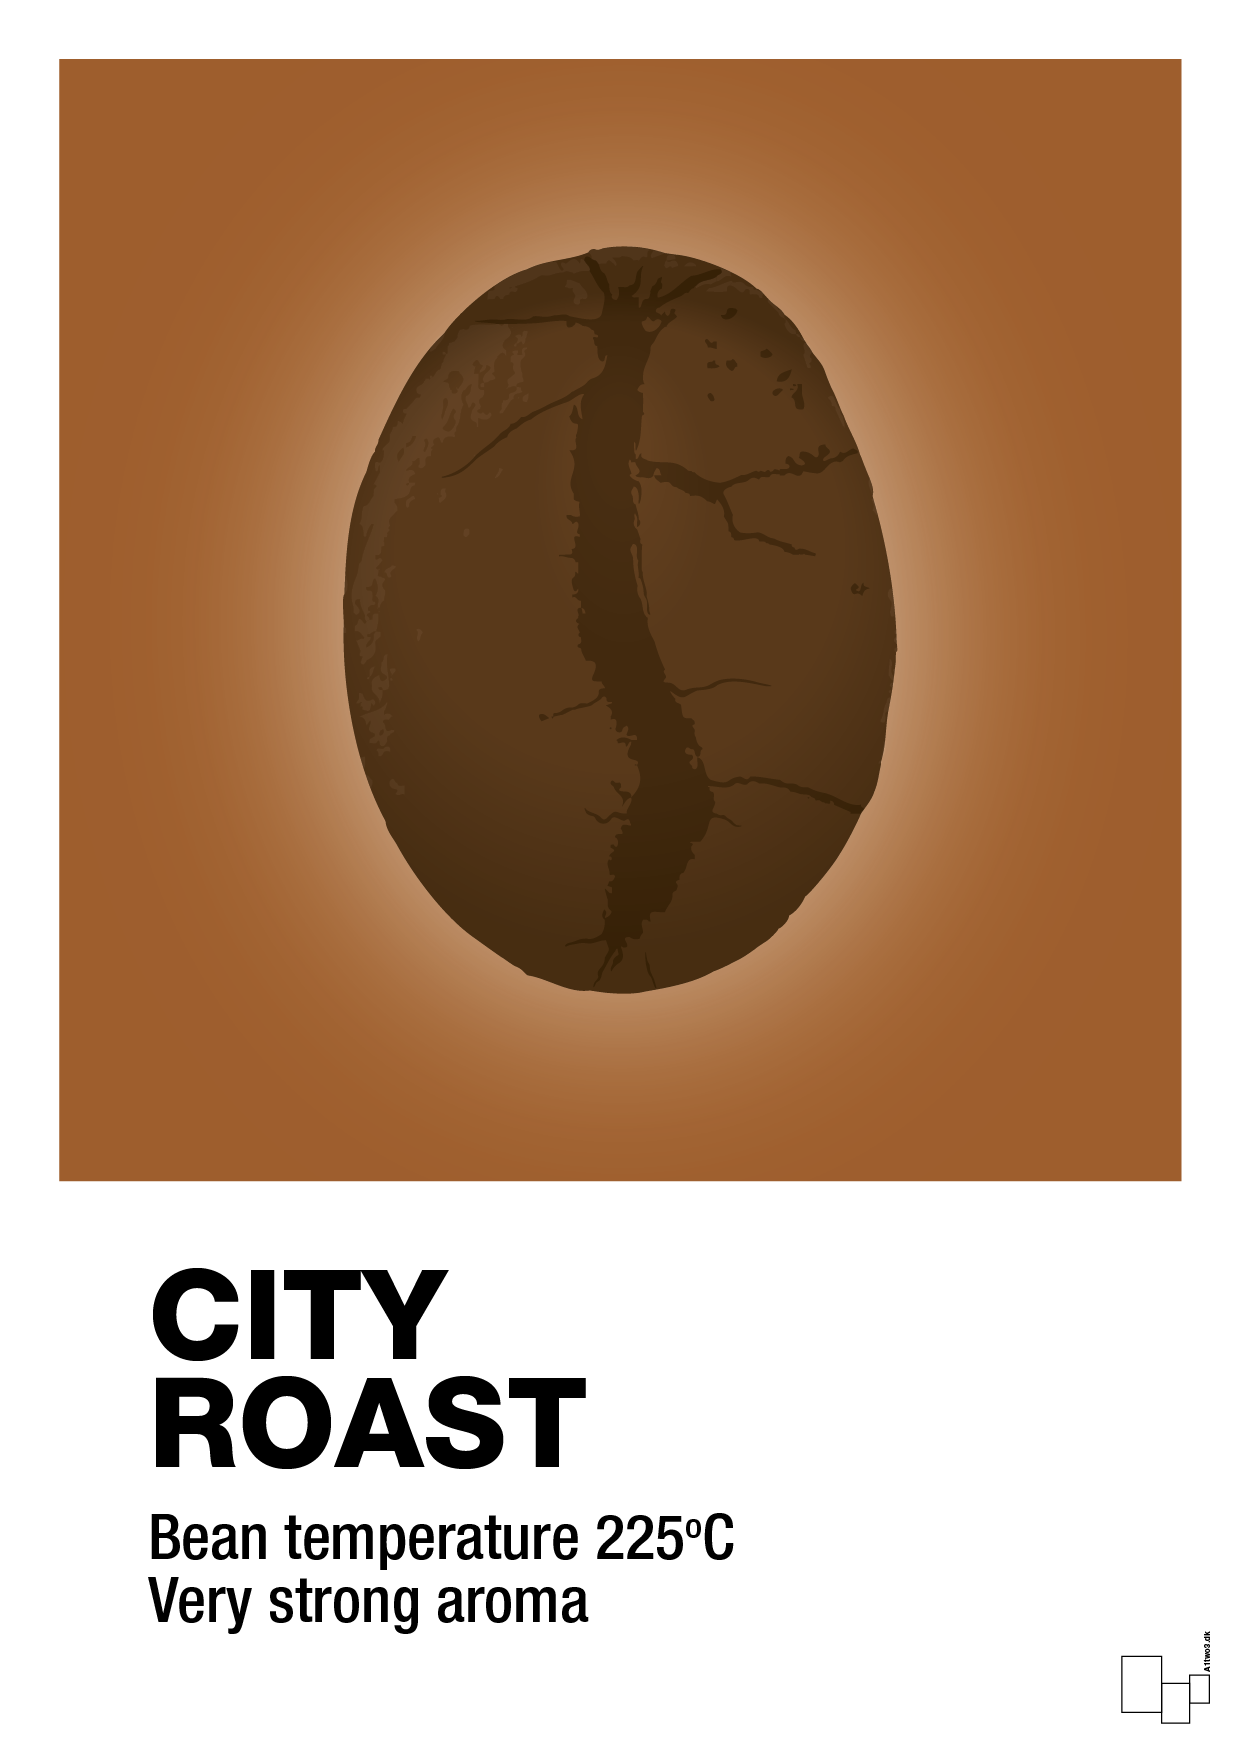 city roast - Plakat med Mad & Drikke i Cognac